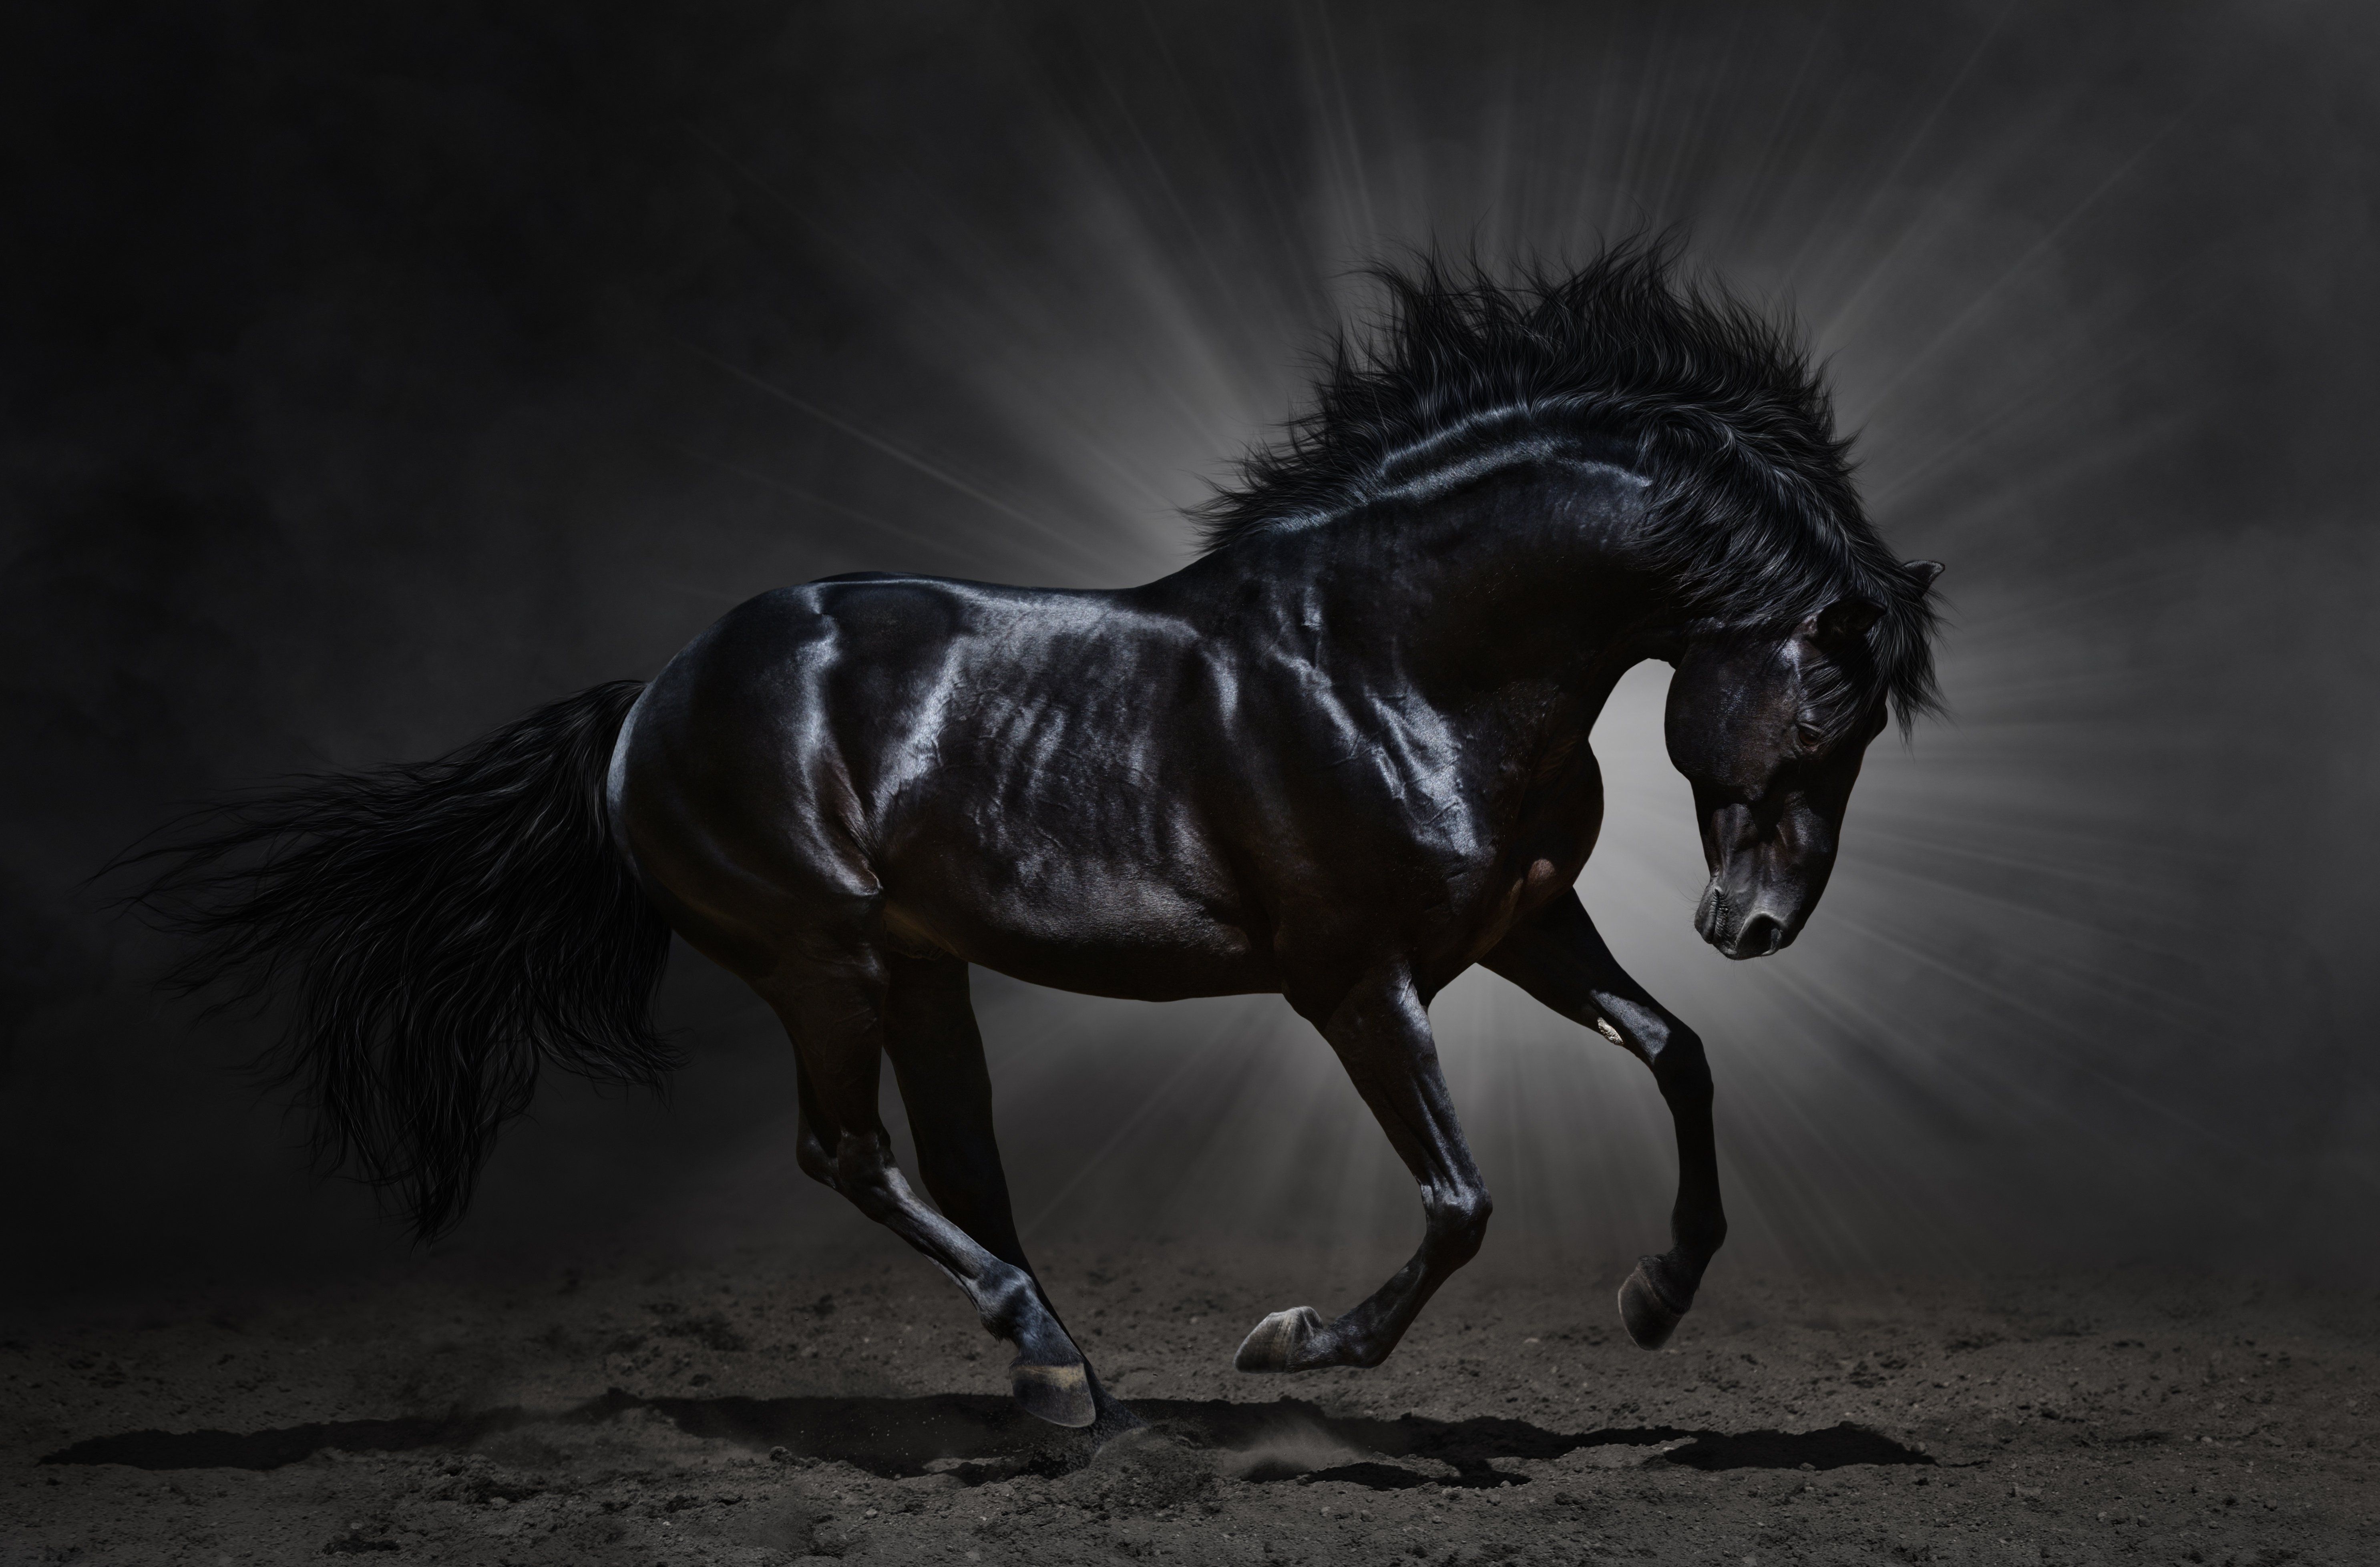 Pure Blood Impresionante Black Stallion # 3280 Fondos de pantalla y Stock gratis